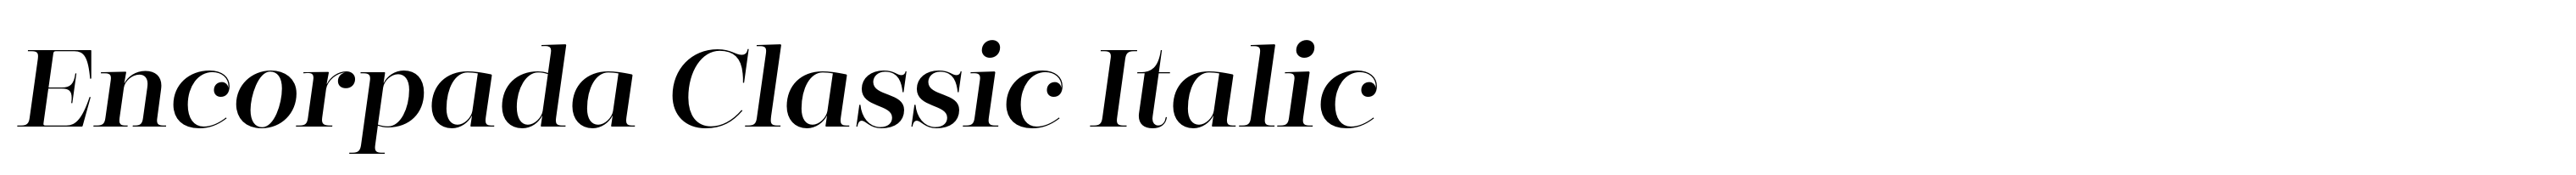 Encorpada Classic Italic